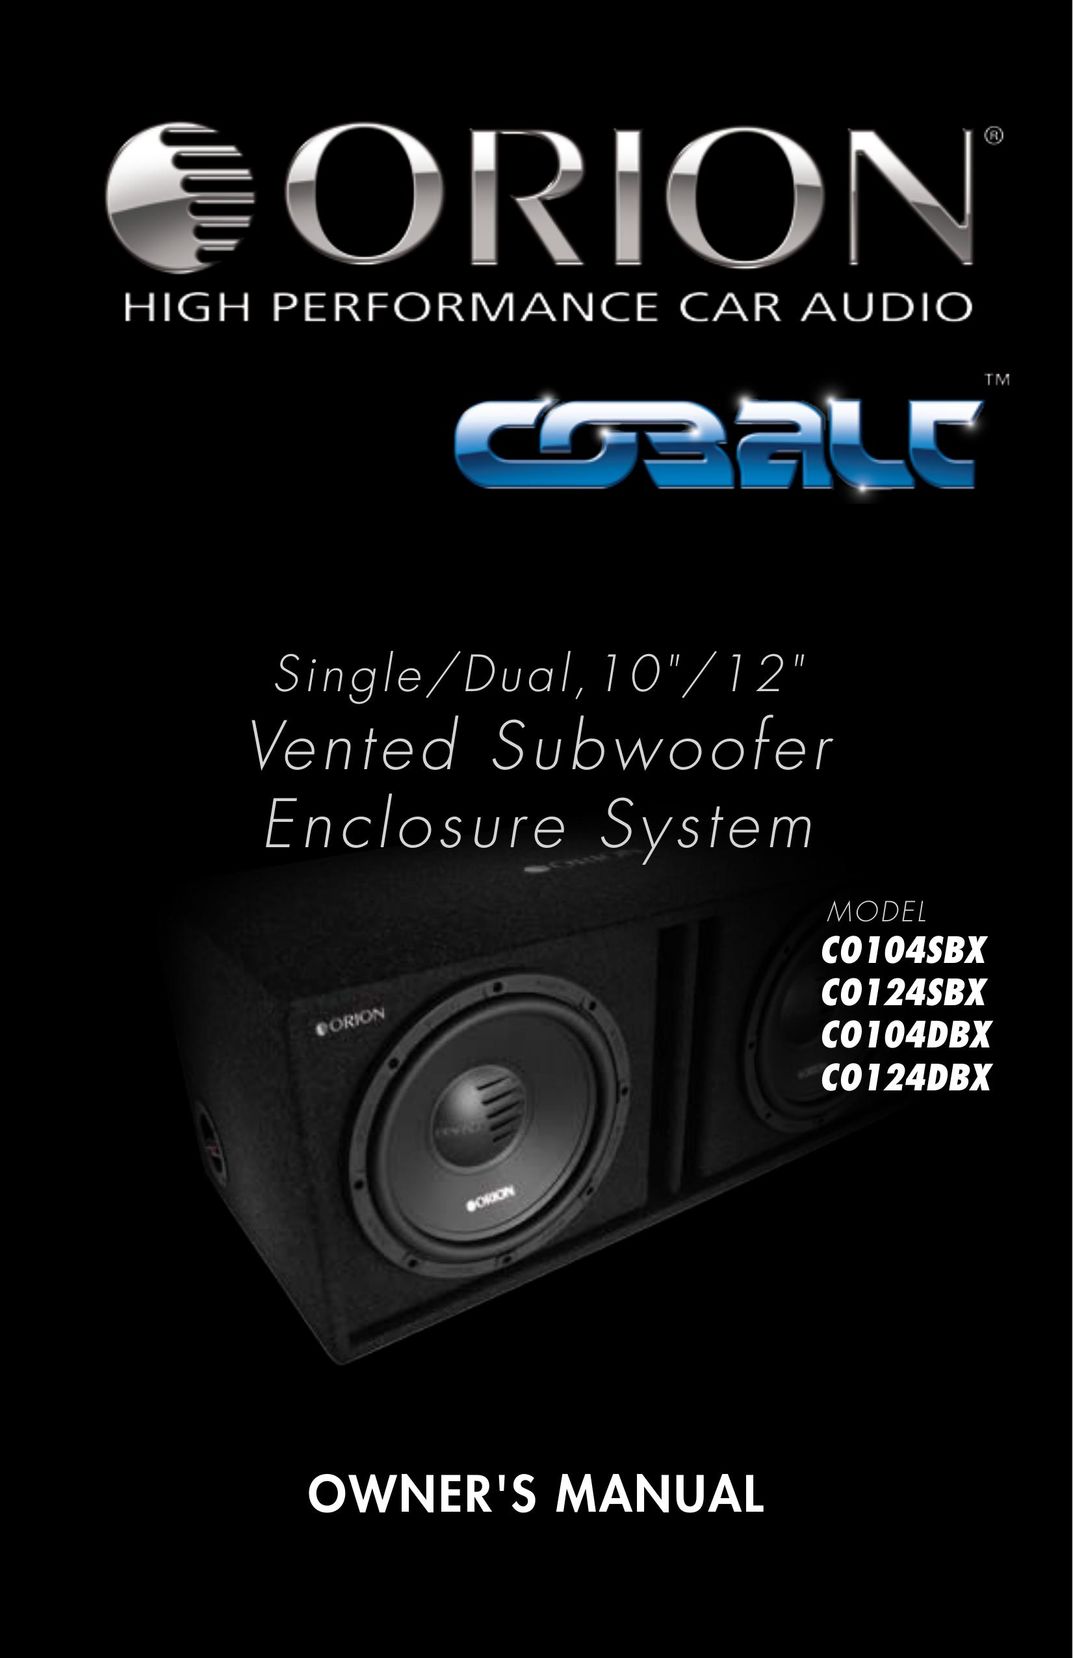 Orion Car Audio CO124DBX Speaker User Manual